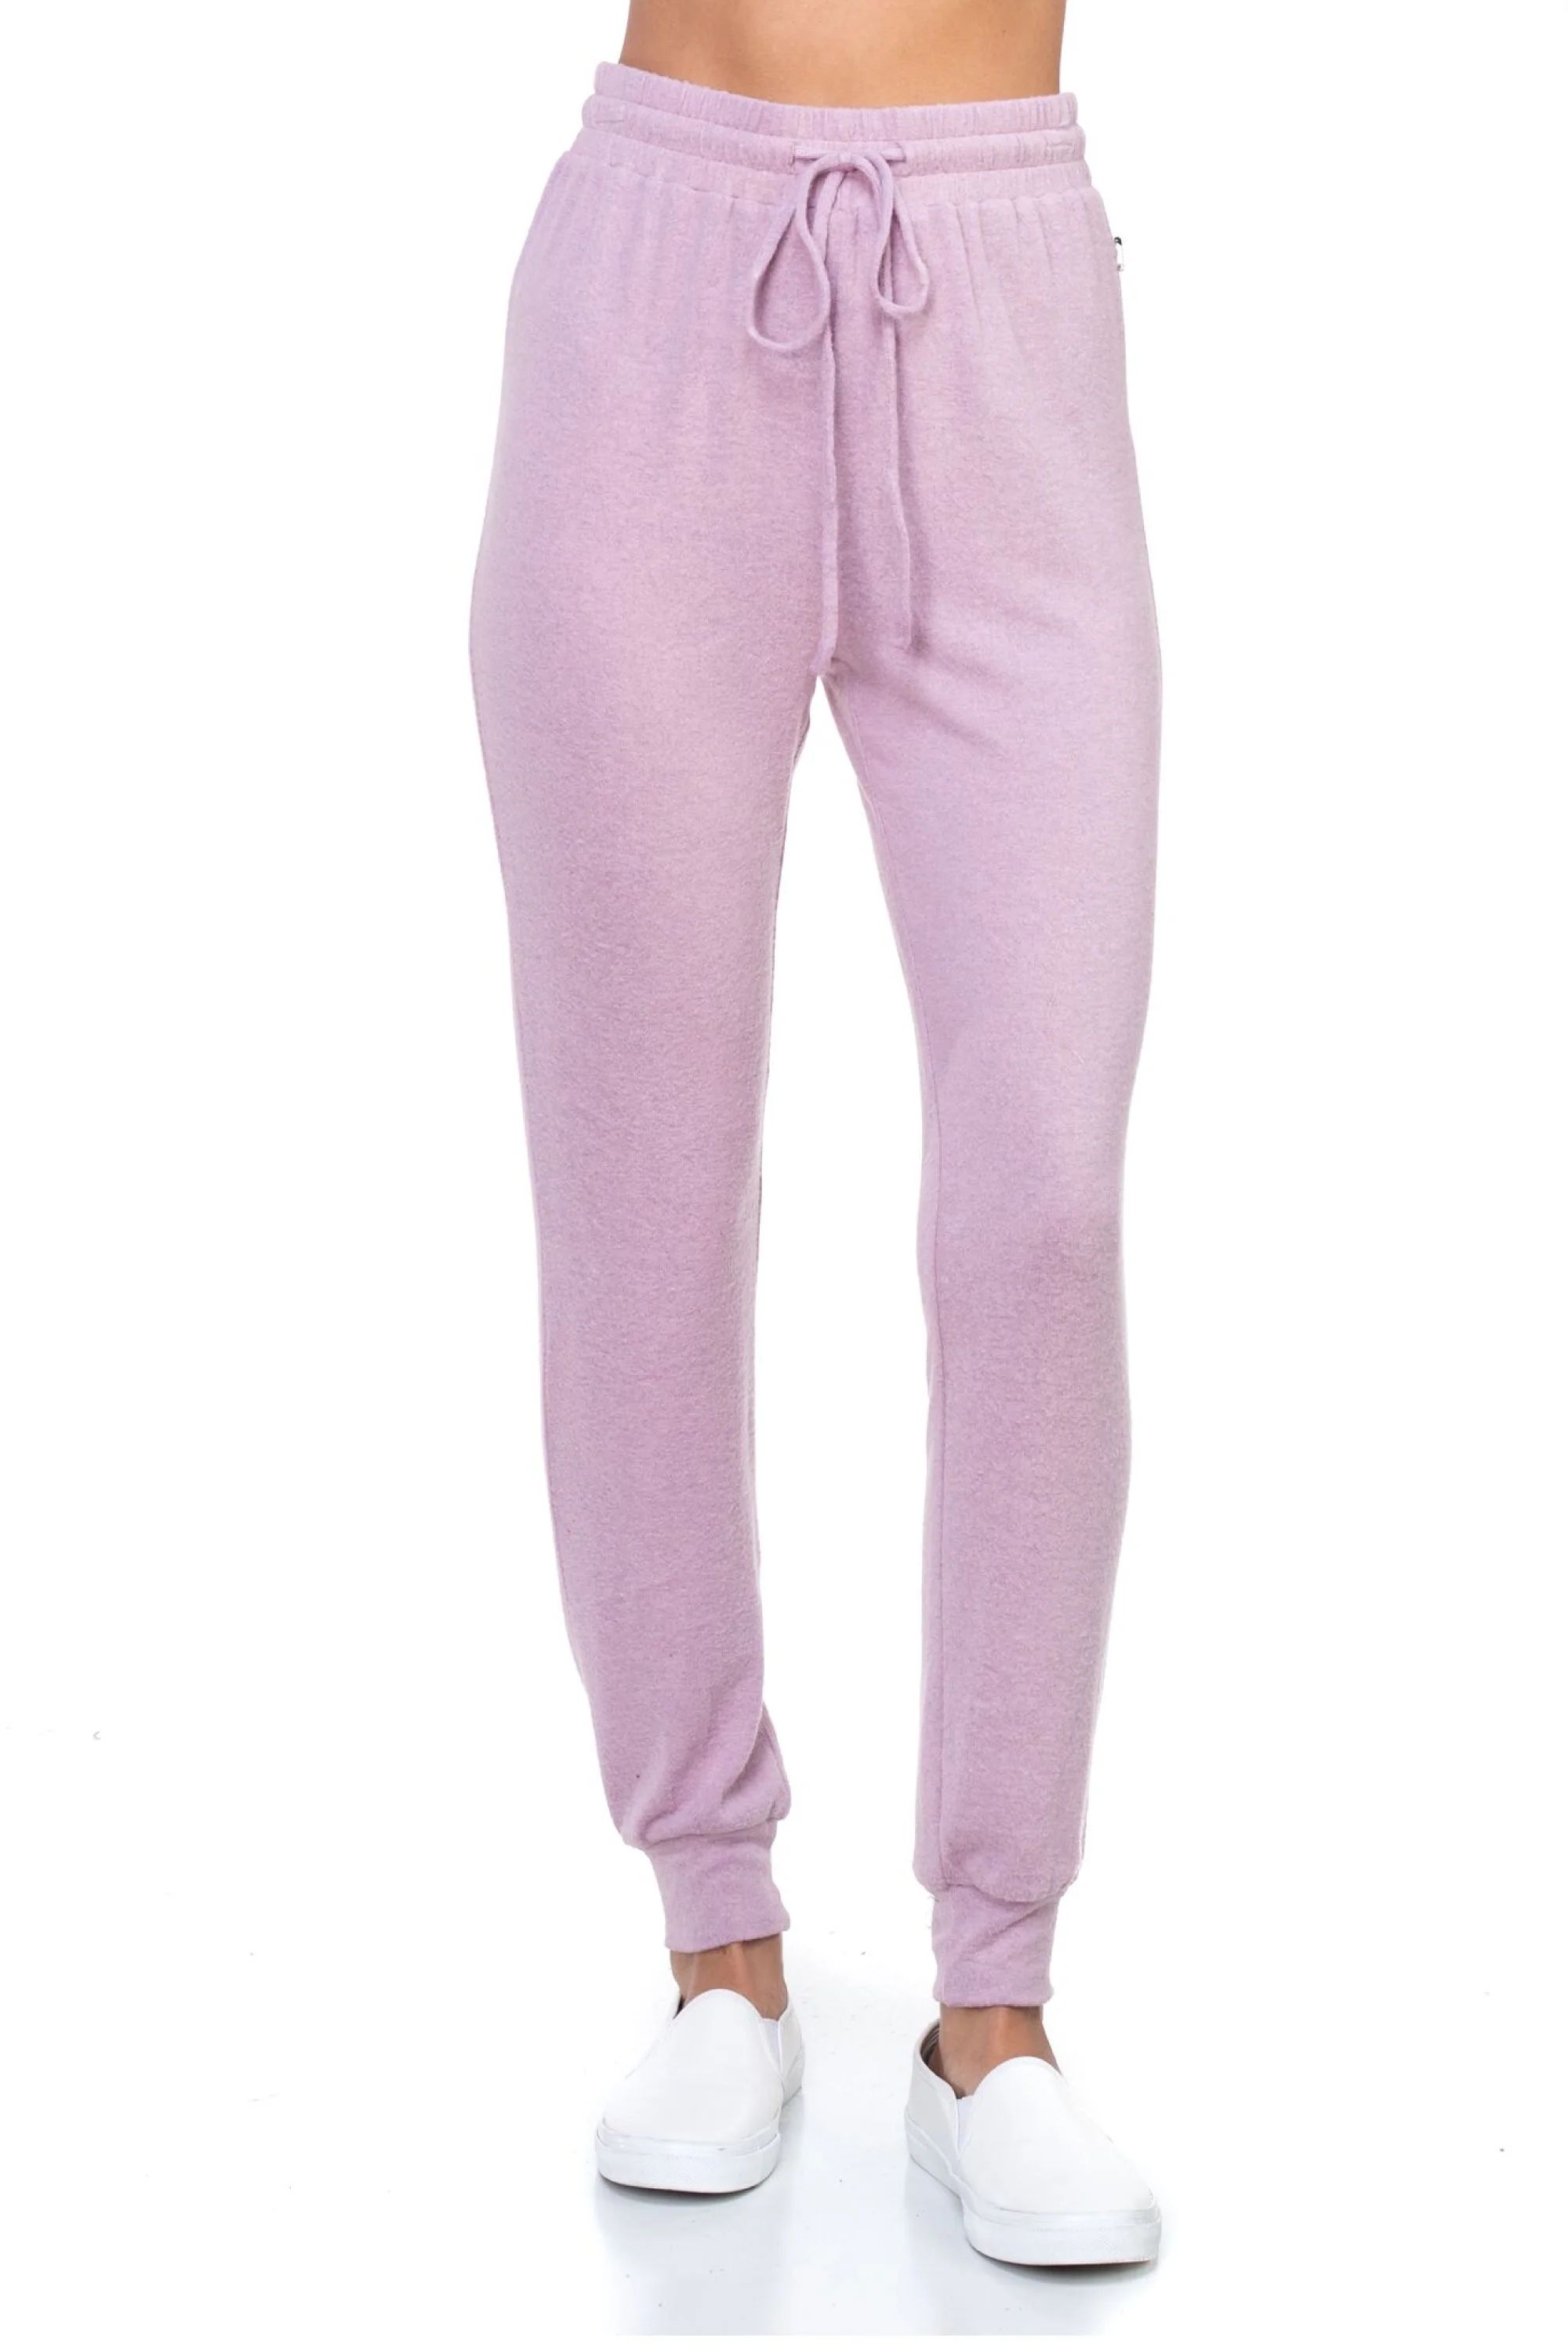 OFASHIONUSA Yummy Knit Jogger Pants (Medium, Lavender) | Walmart (US)